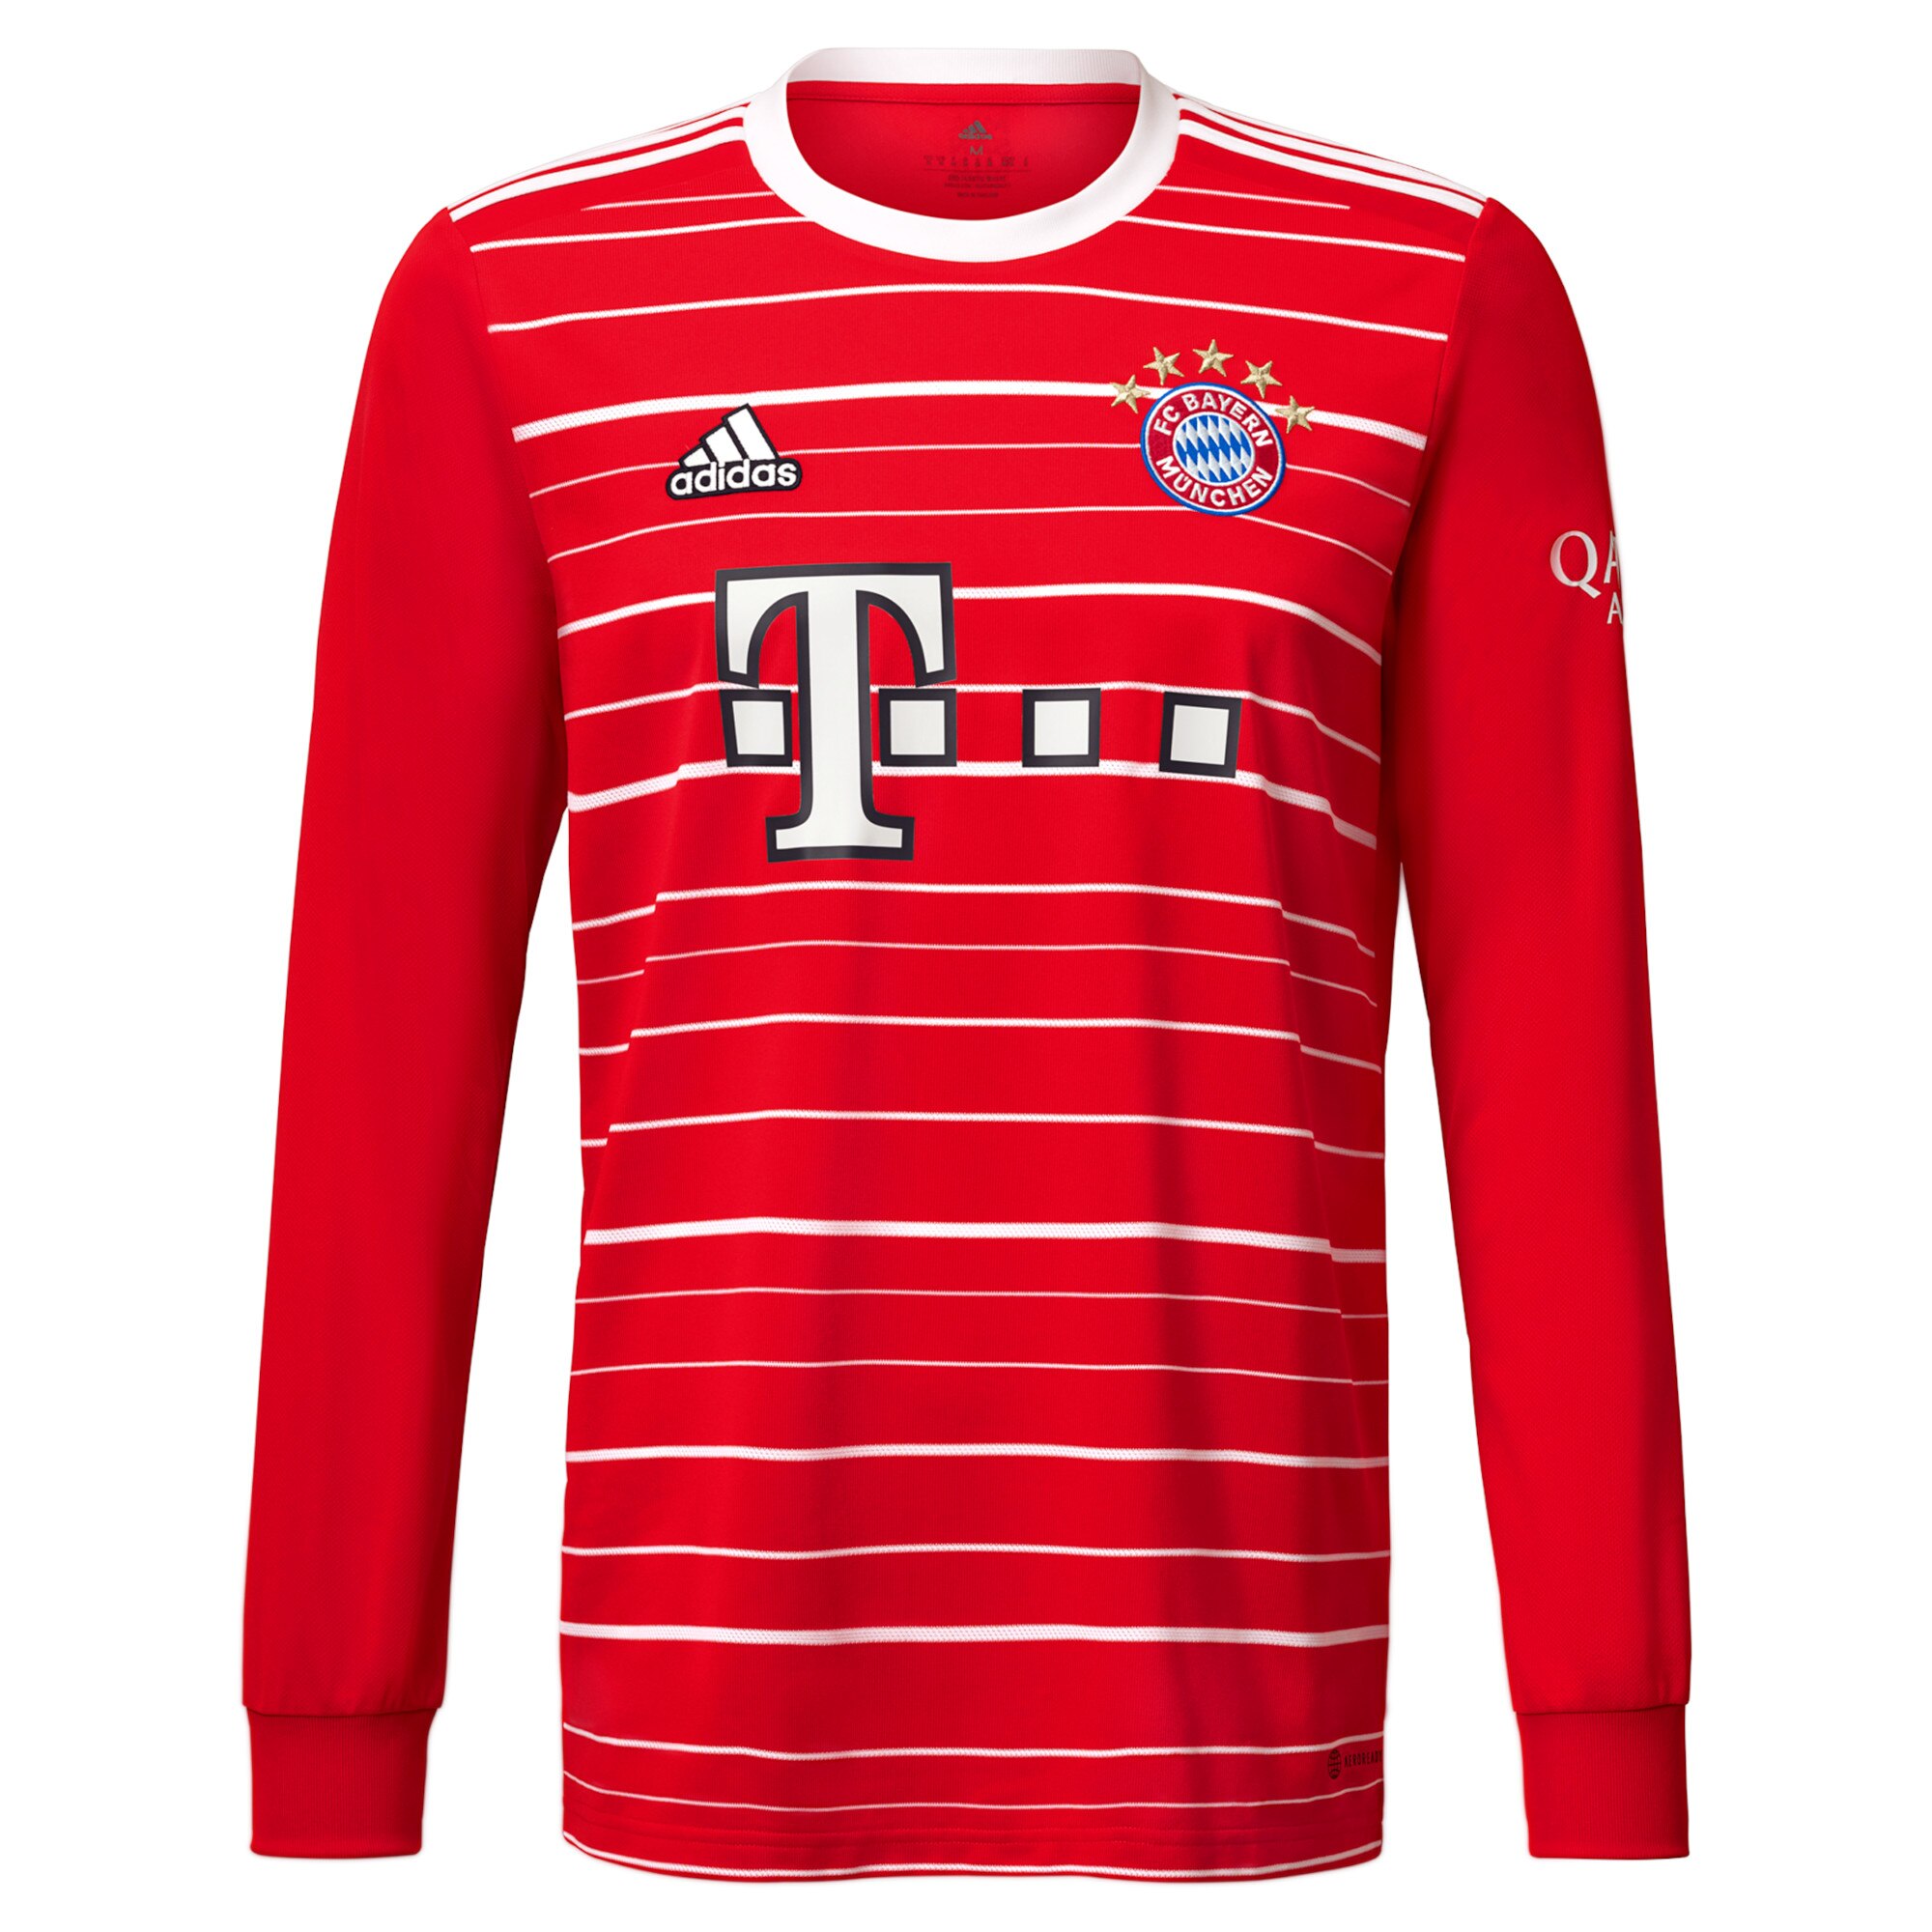 FC Bayern Home Shirt 2022-23 - Long Sleeve with Hernández 21 printing